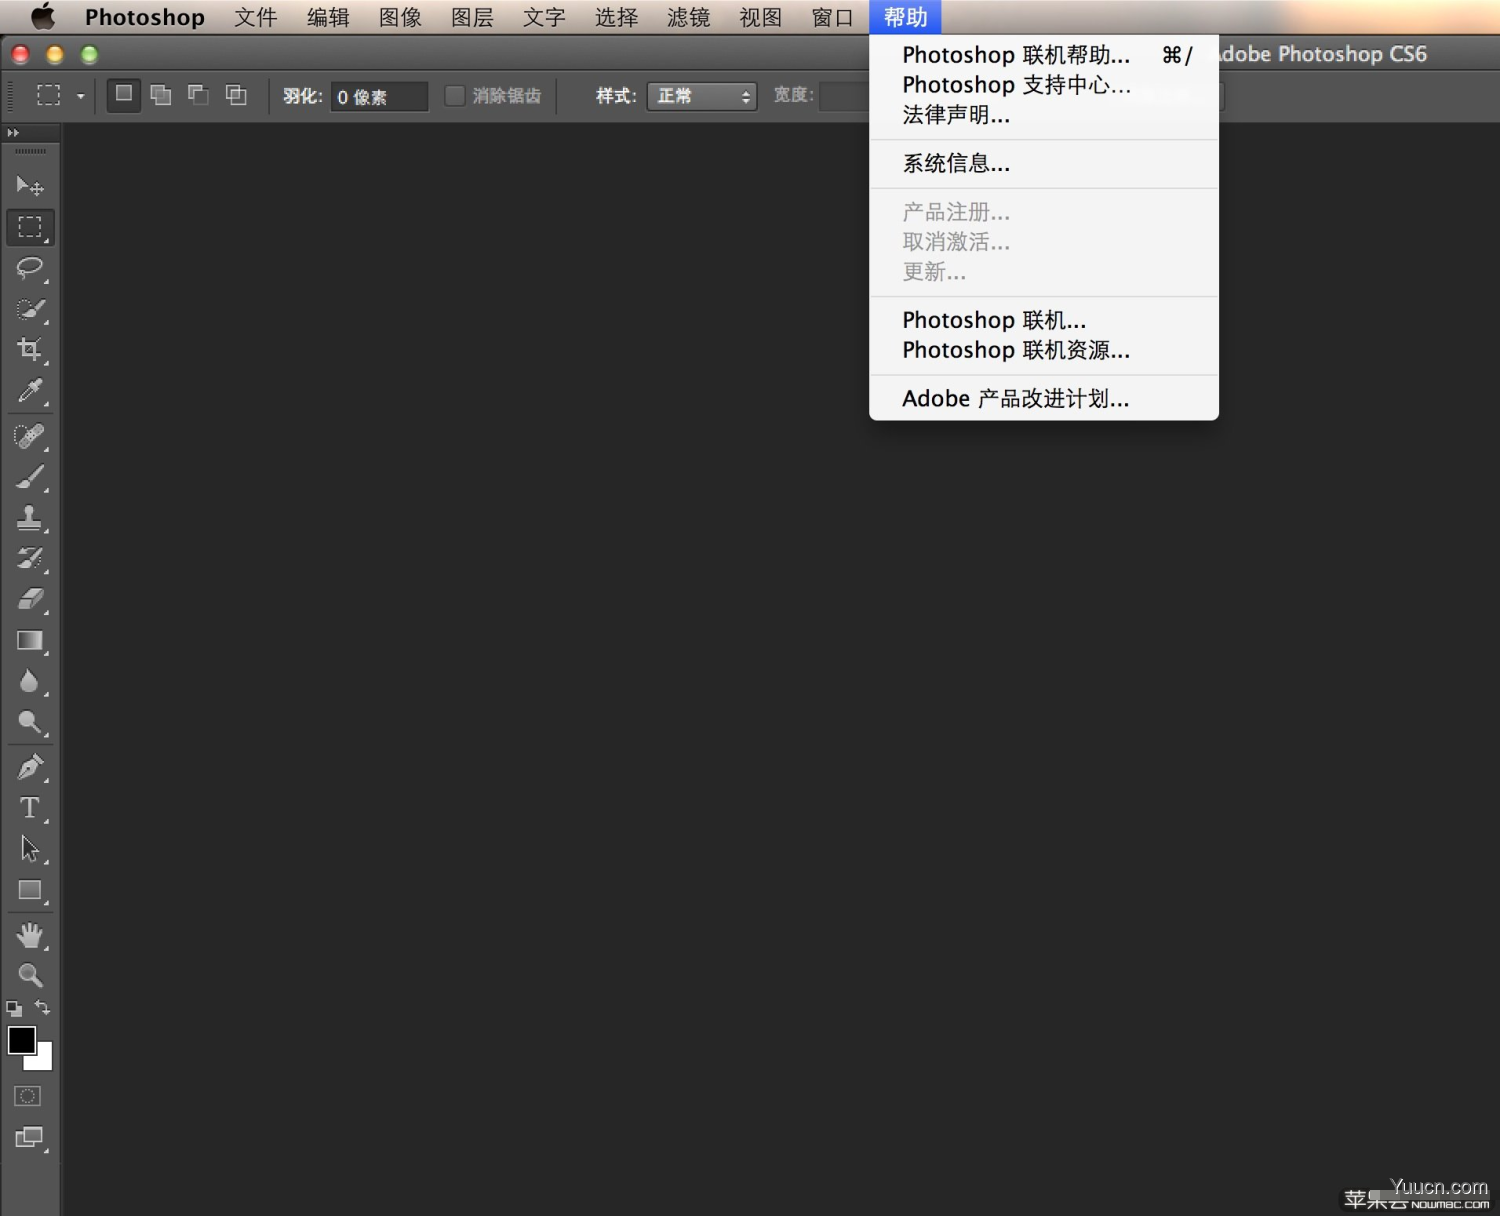 Adobe Photoshop CS6 for Mac的下载地址和详细安装破解步骤